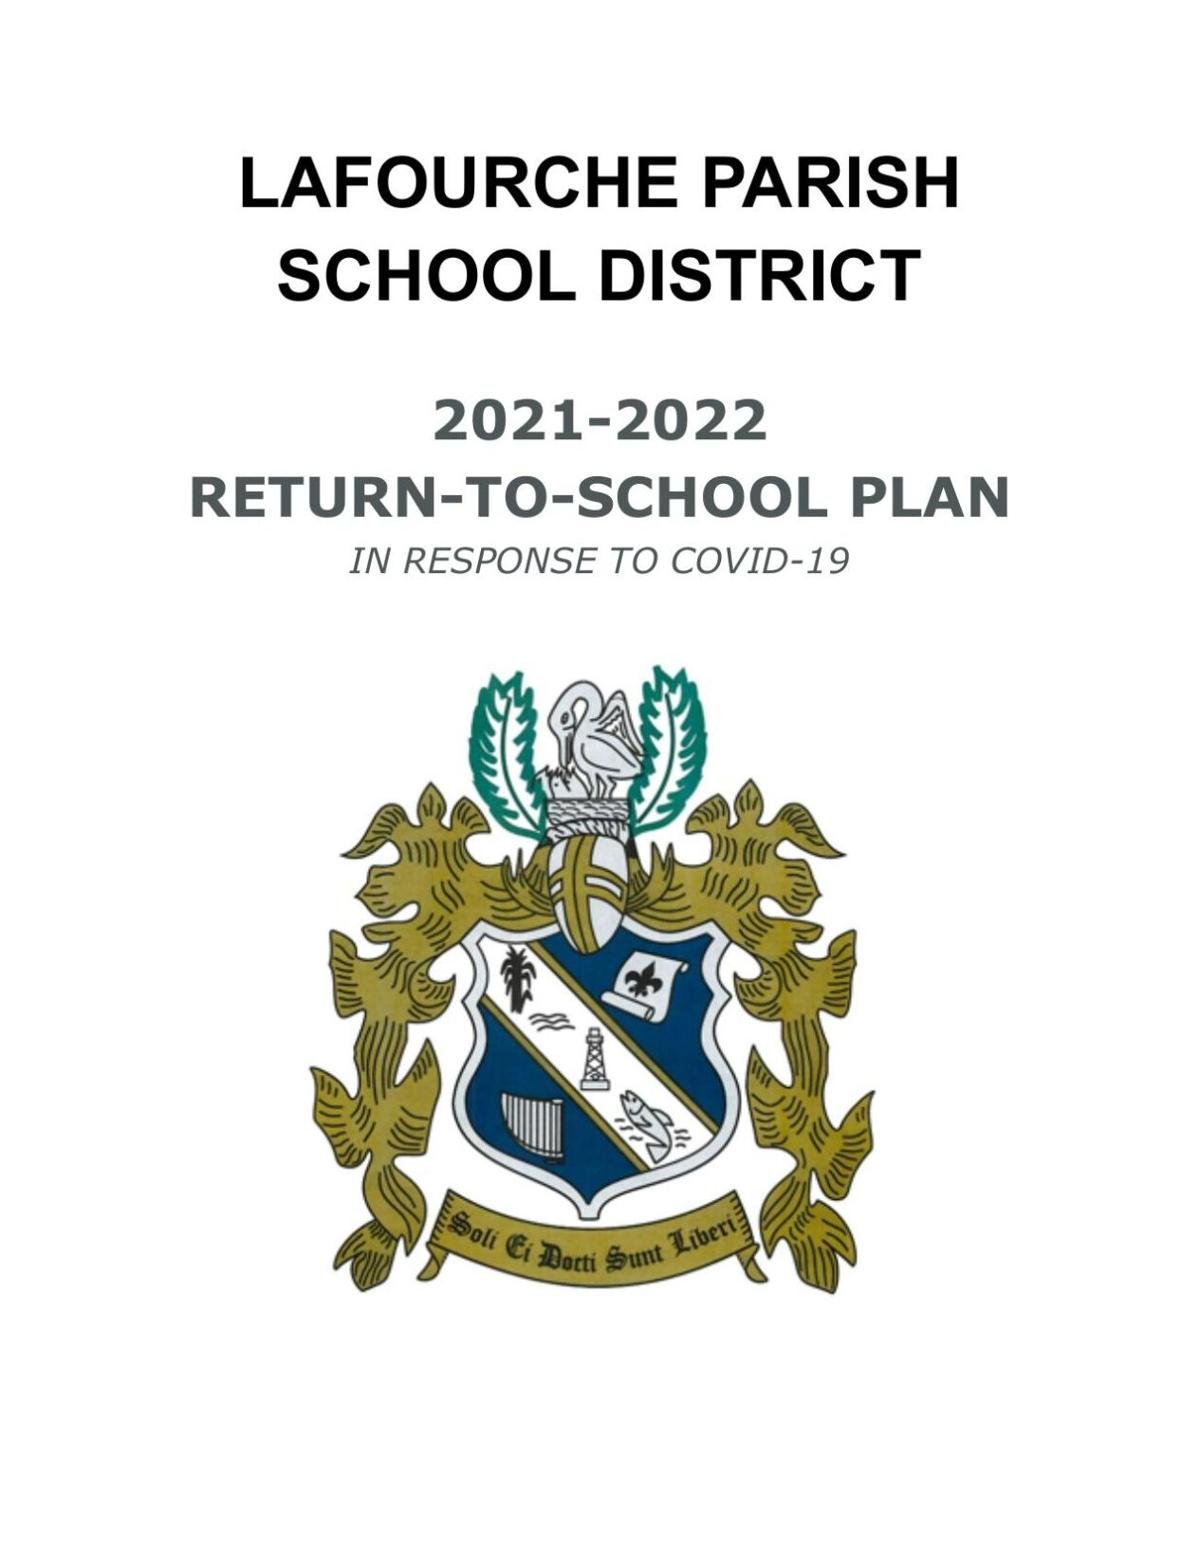 Lafourche Parish School District releases 2021-2022 Back to School Plan